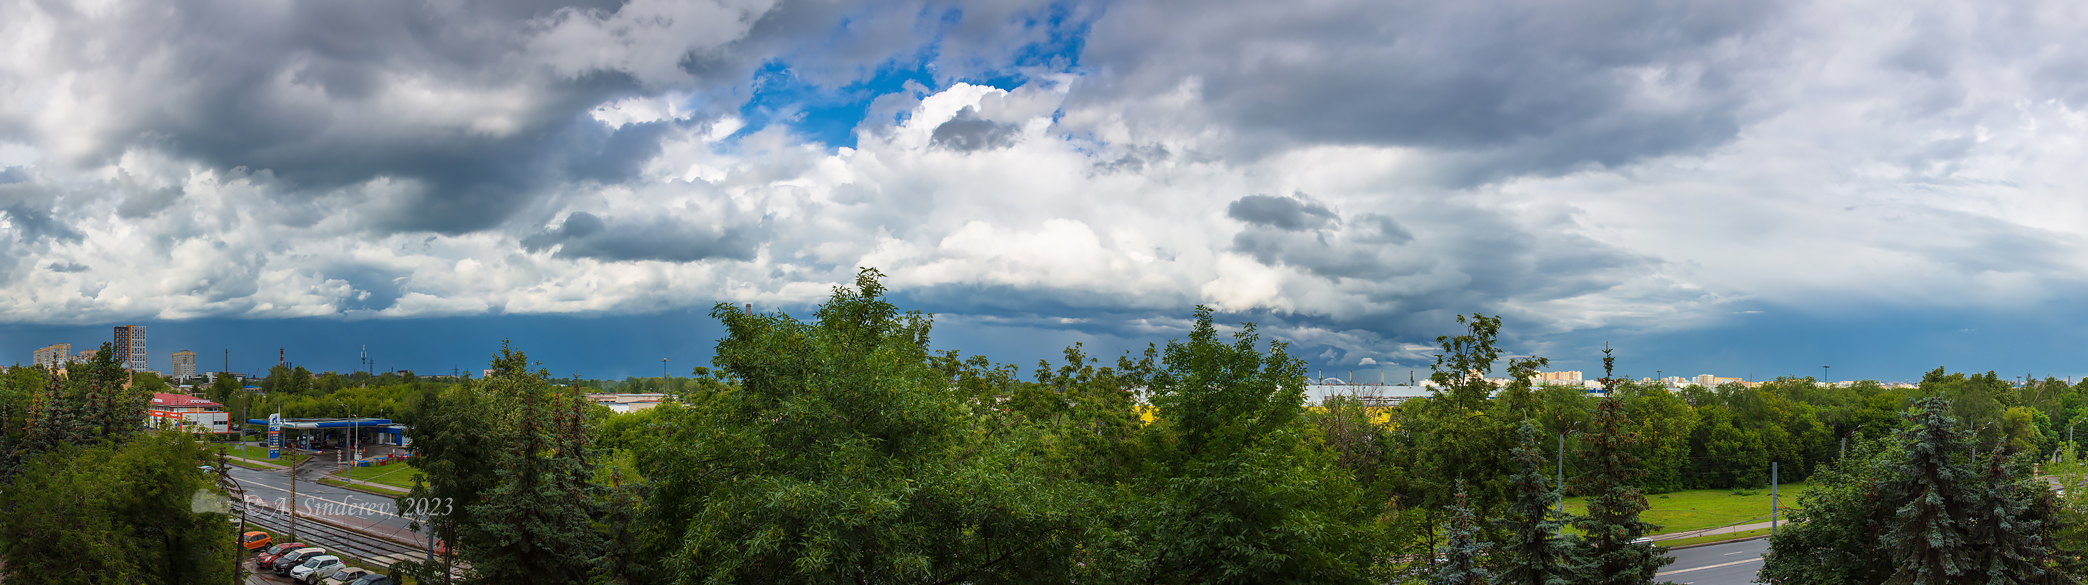 Панорама грозовых облаков